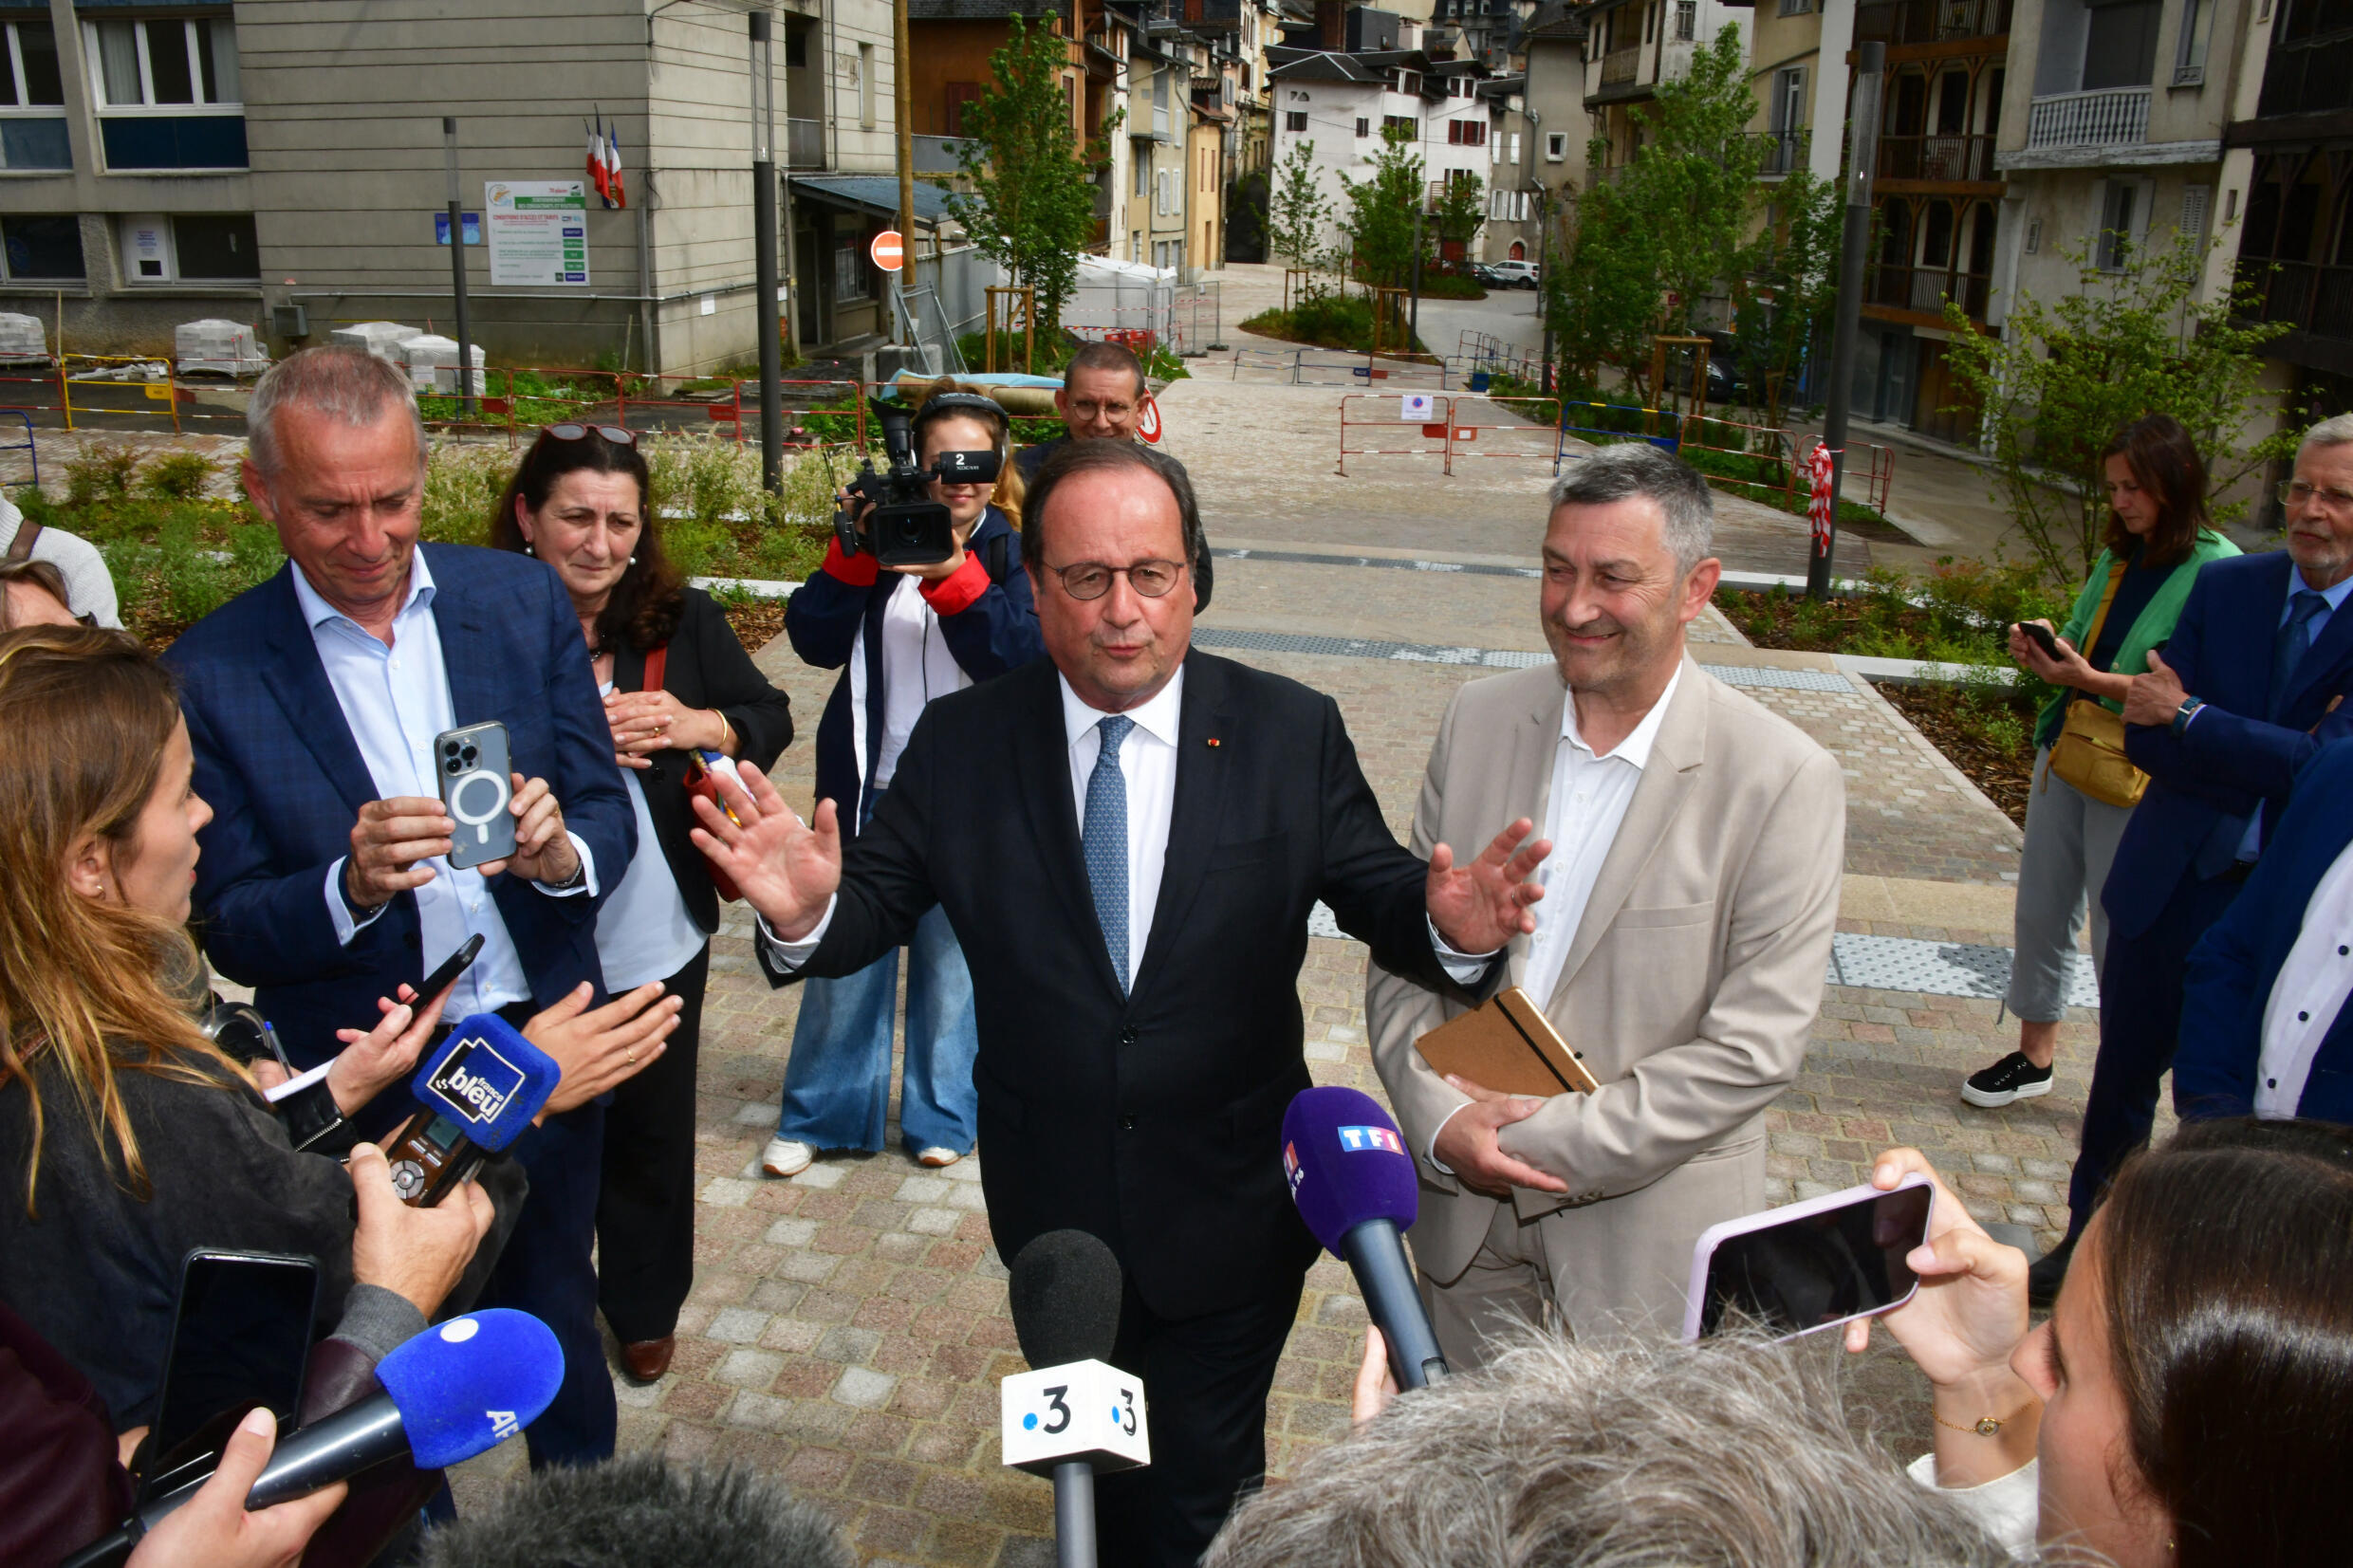 Former president Hollande makes surprise comeback in French election